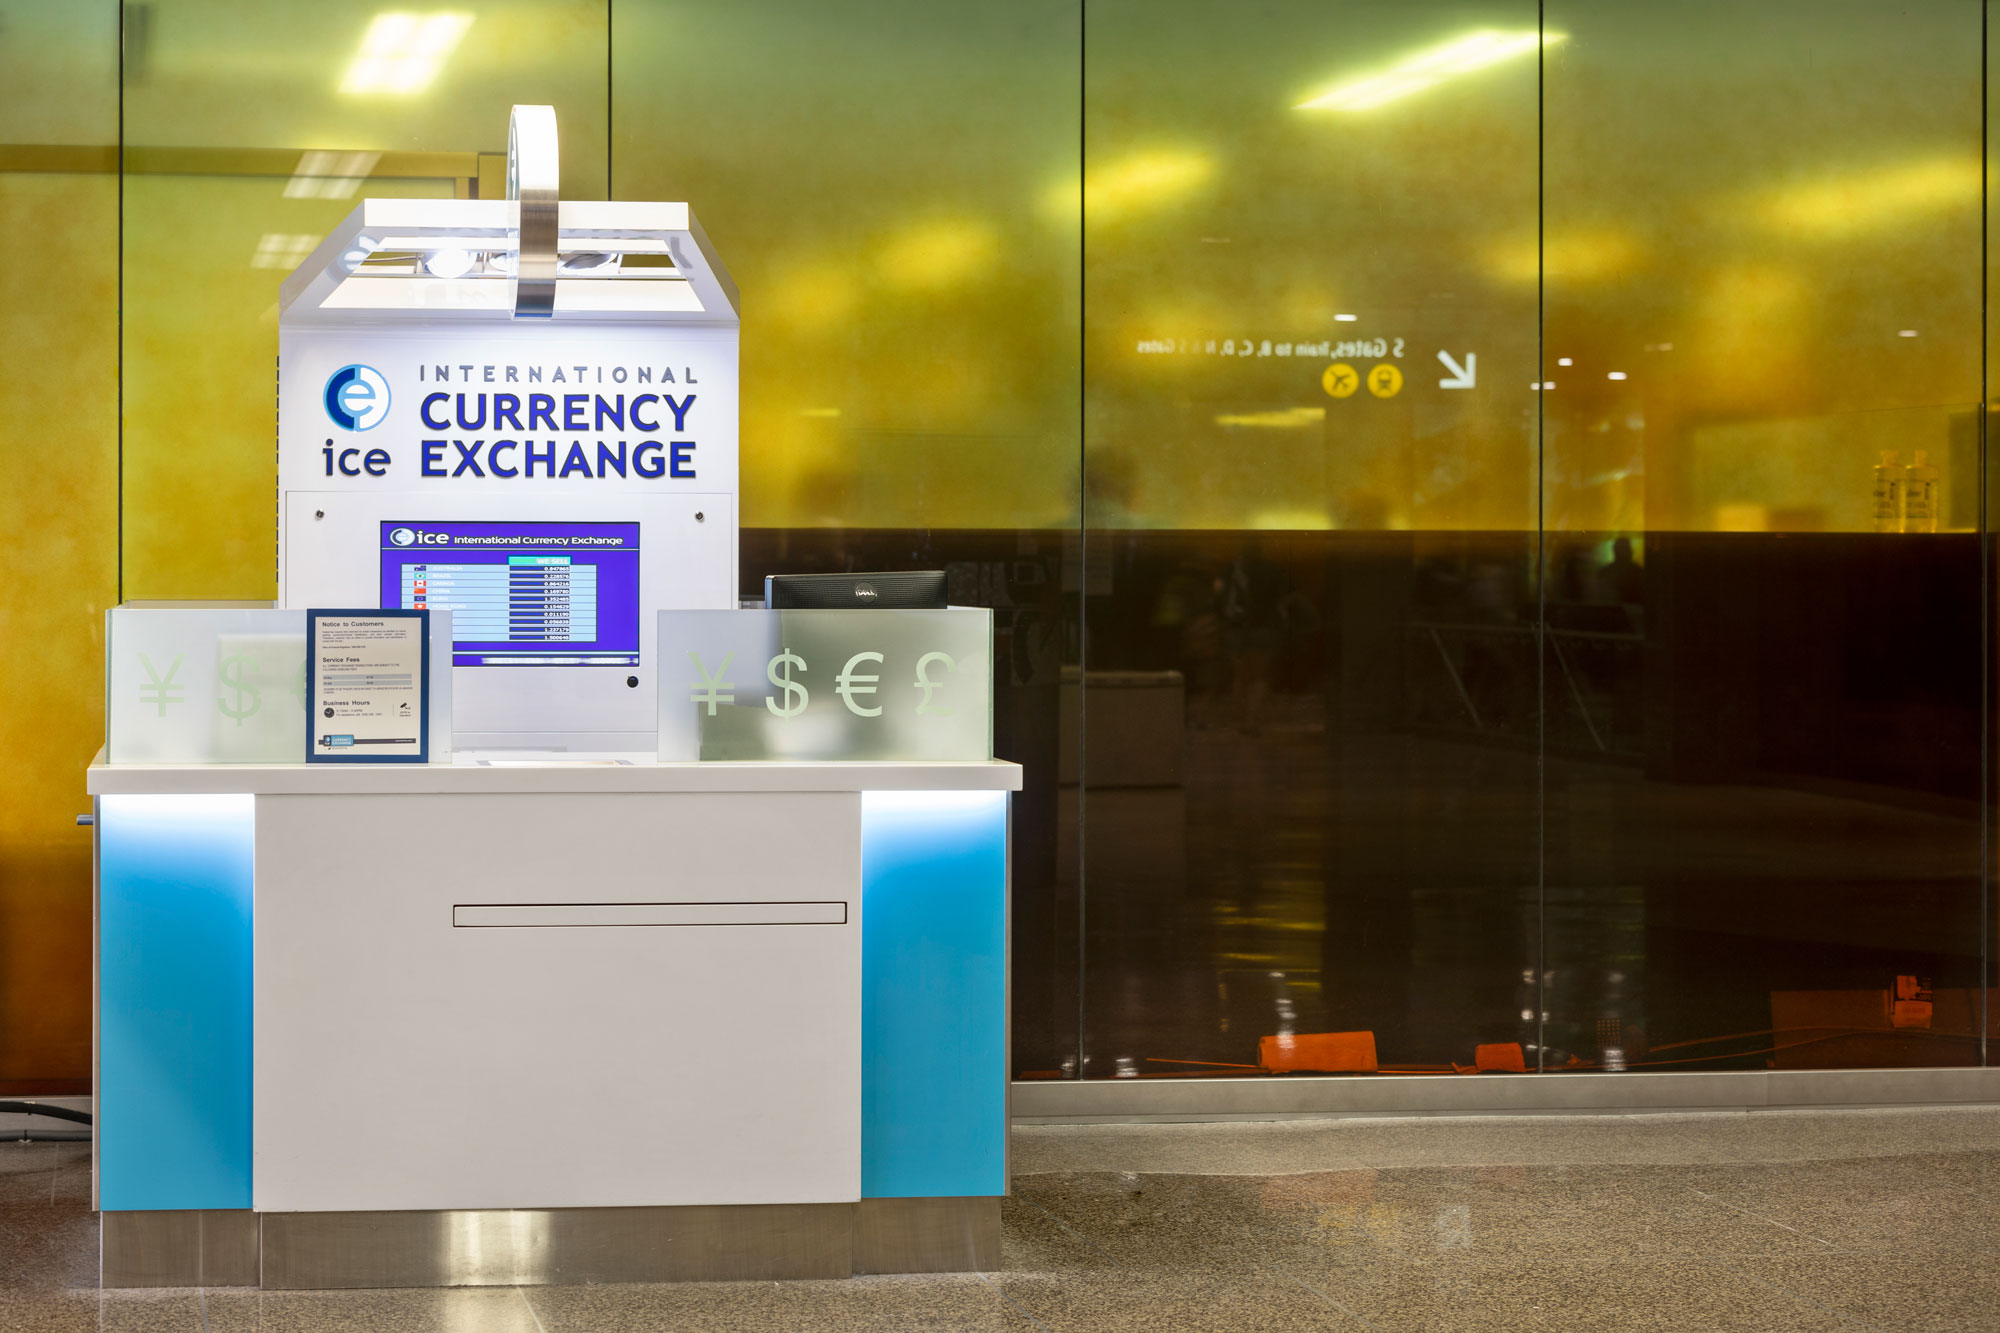 SEA International Currency Exchange Kiosk (A Gates)